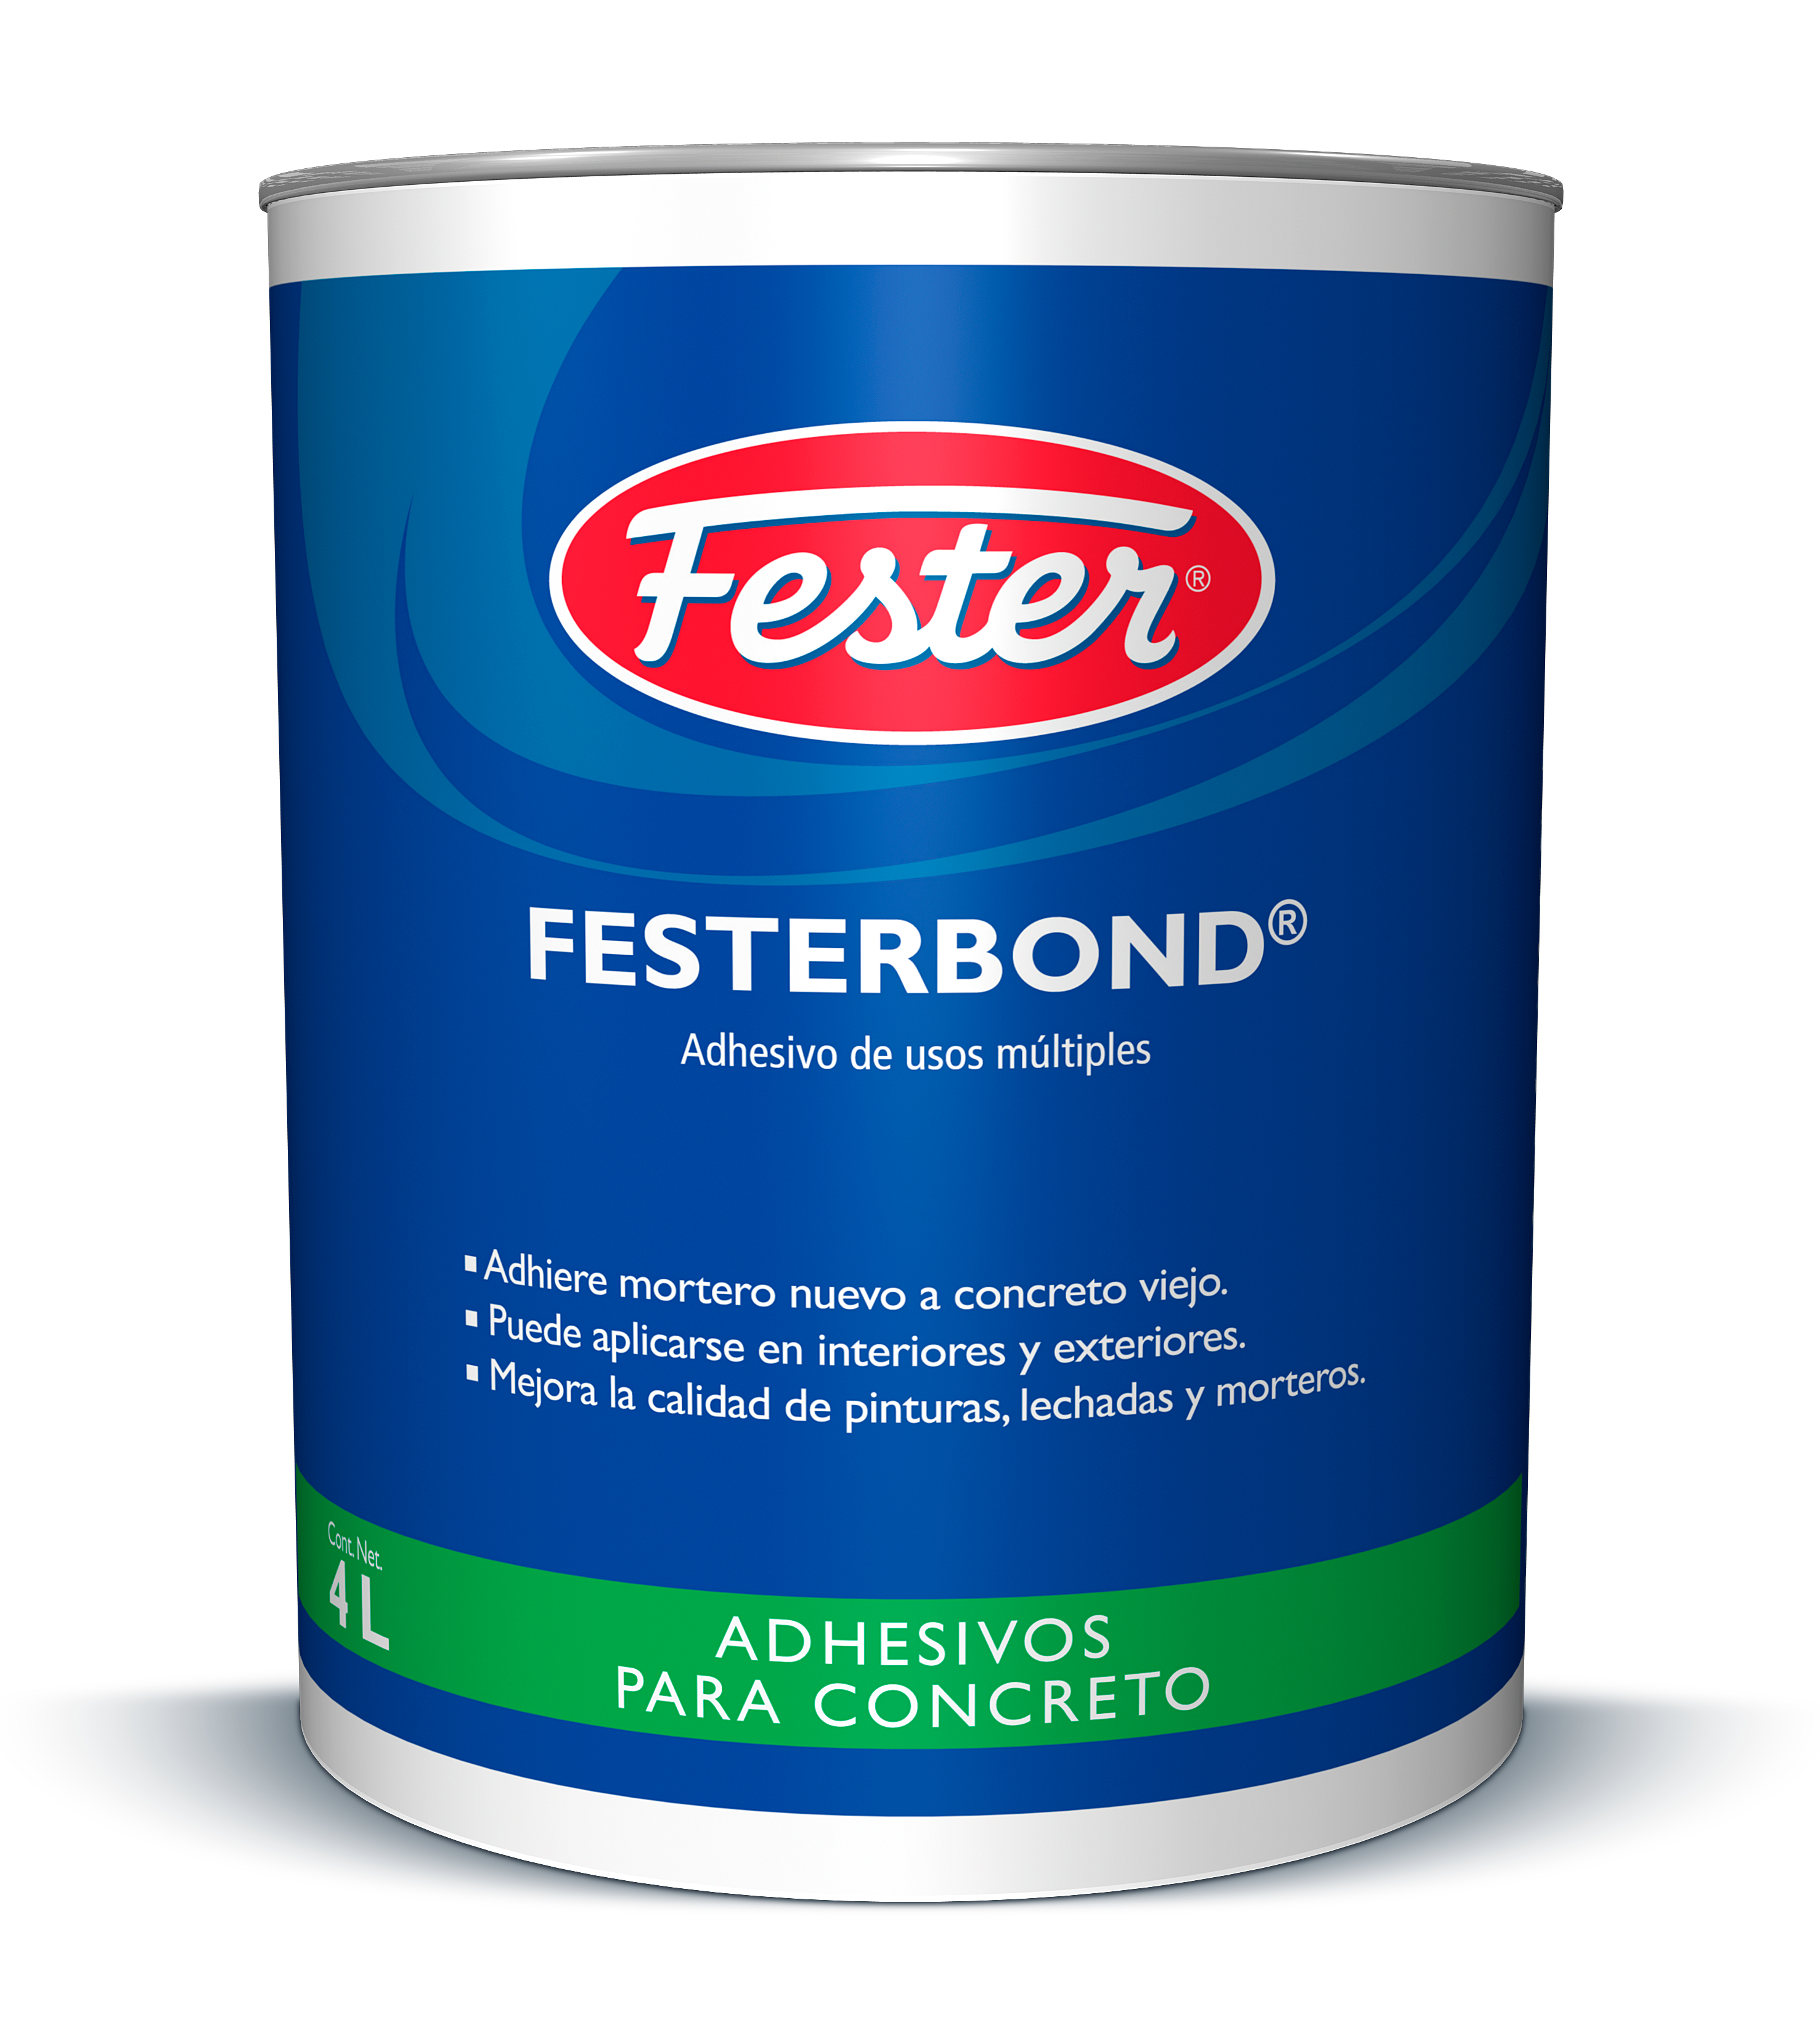 FESTERBOND – Fester Arrecife